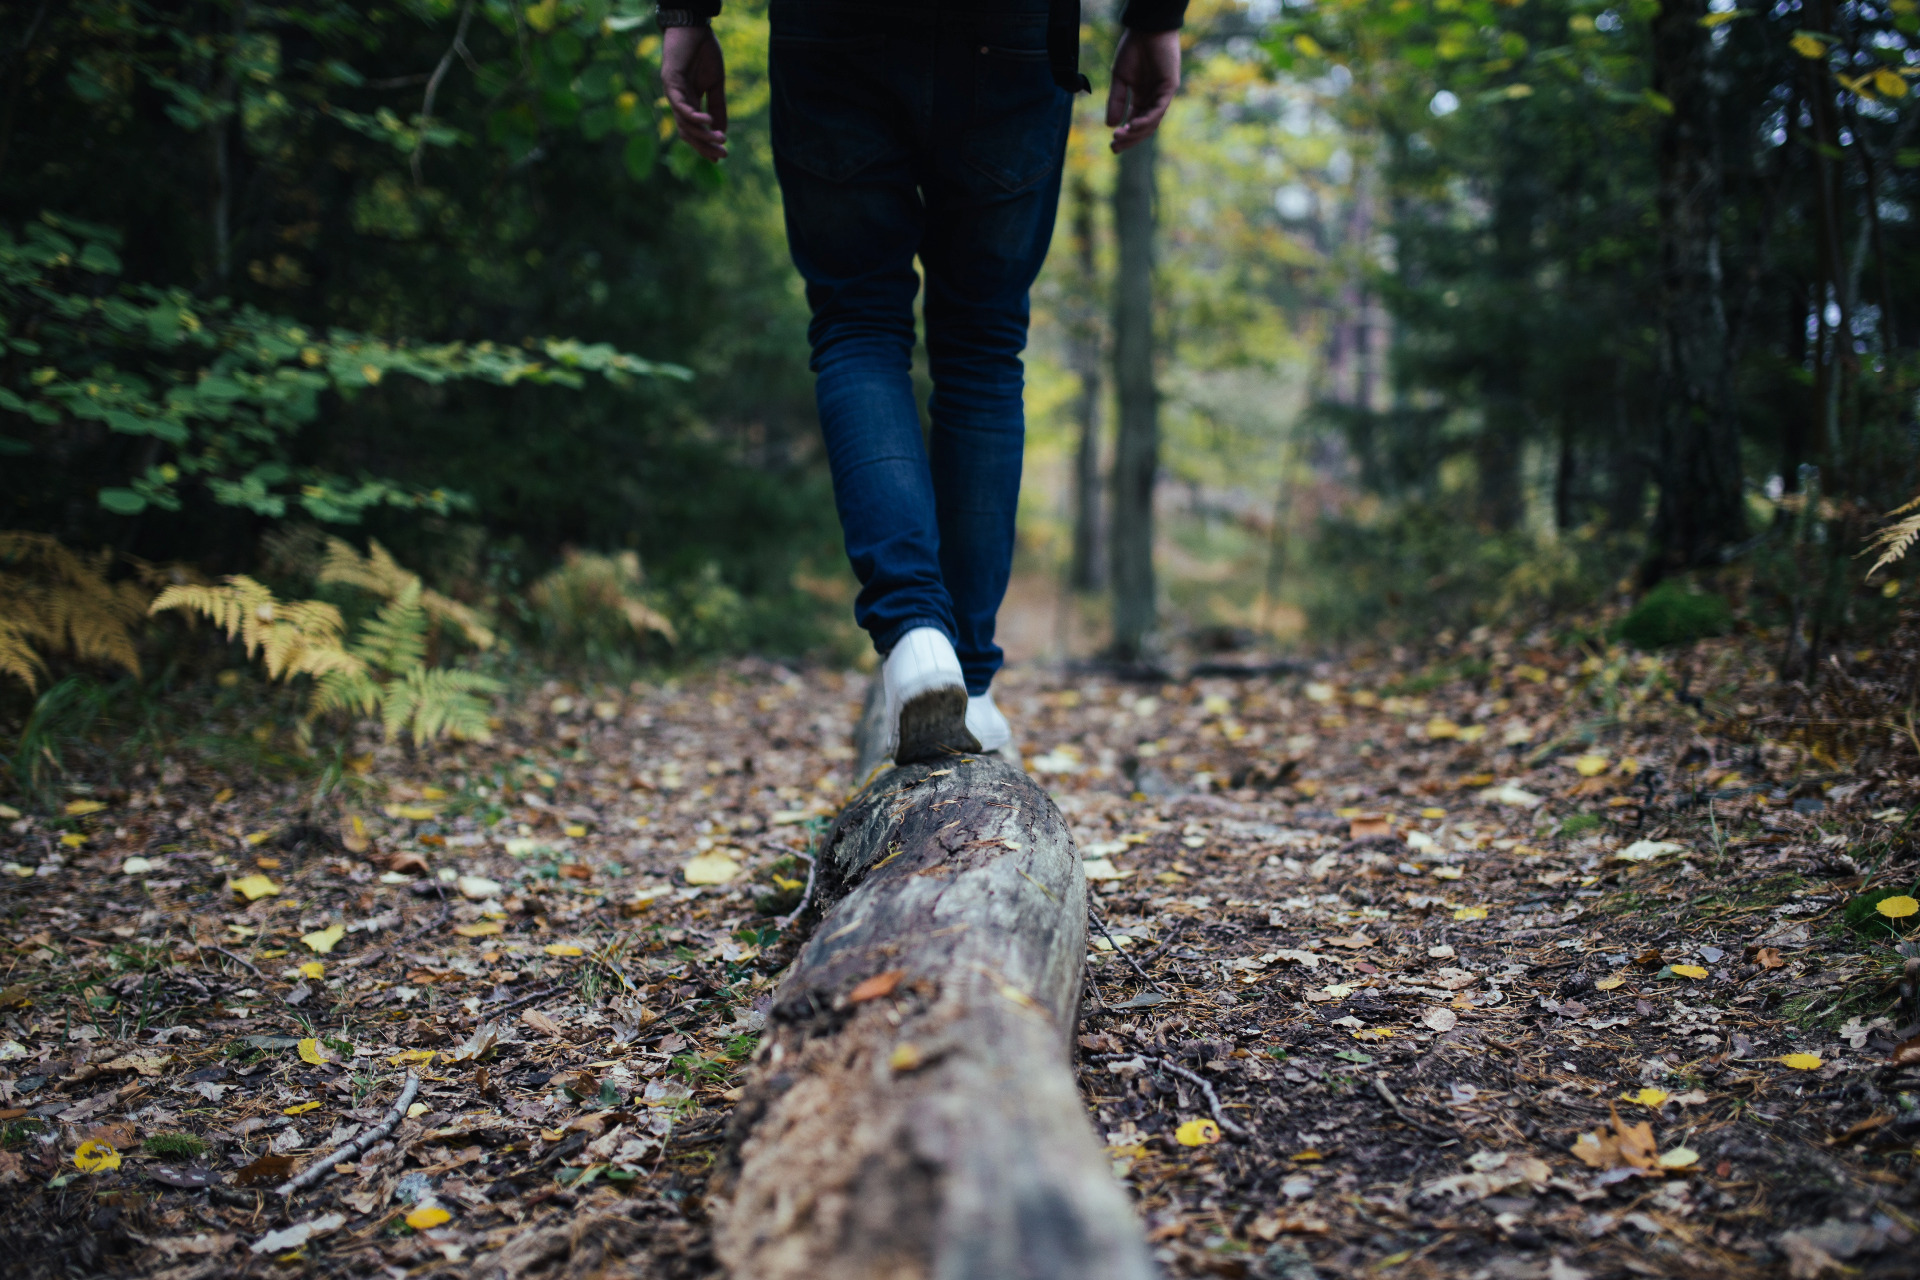 Balancing, man walking along a fallen lof in the forest